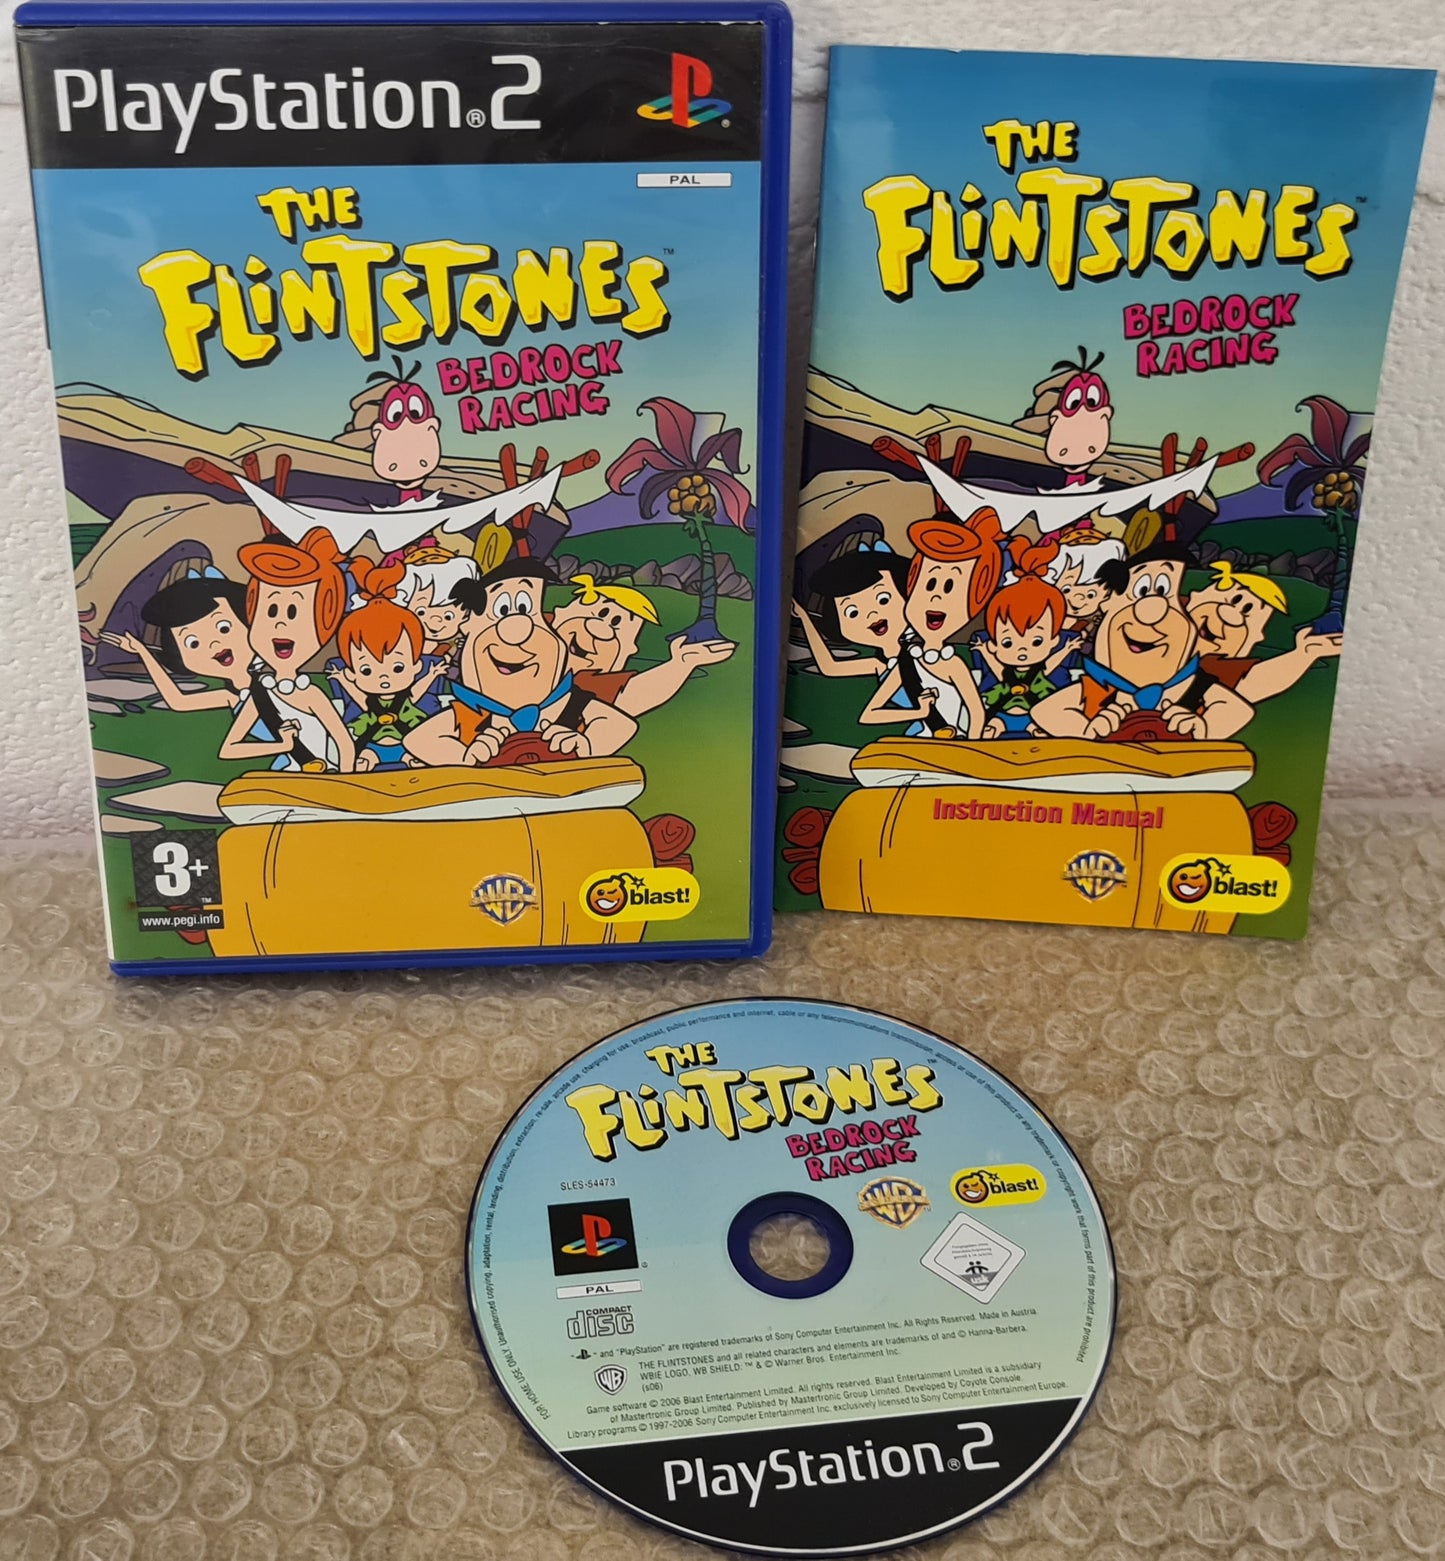 The Flintstones Bedrock Racing Sony Playstation 2 (PS2) Game